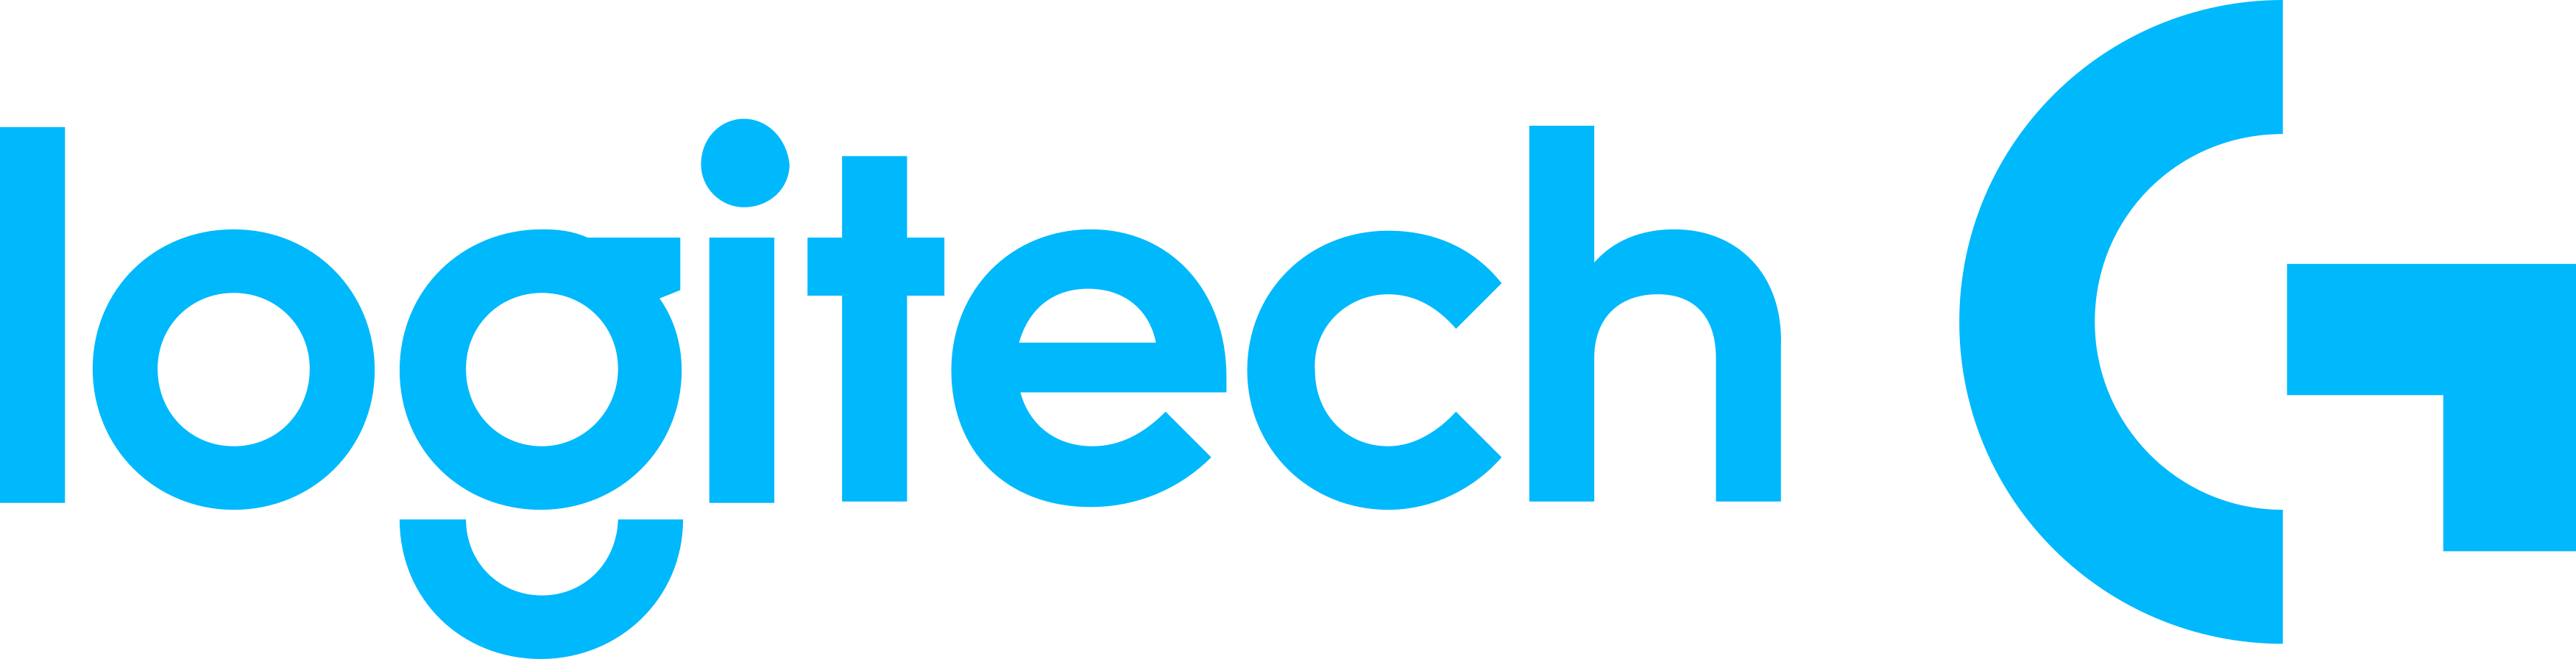 logitech logo 2 - Logitech Logo